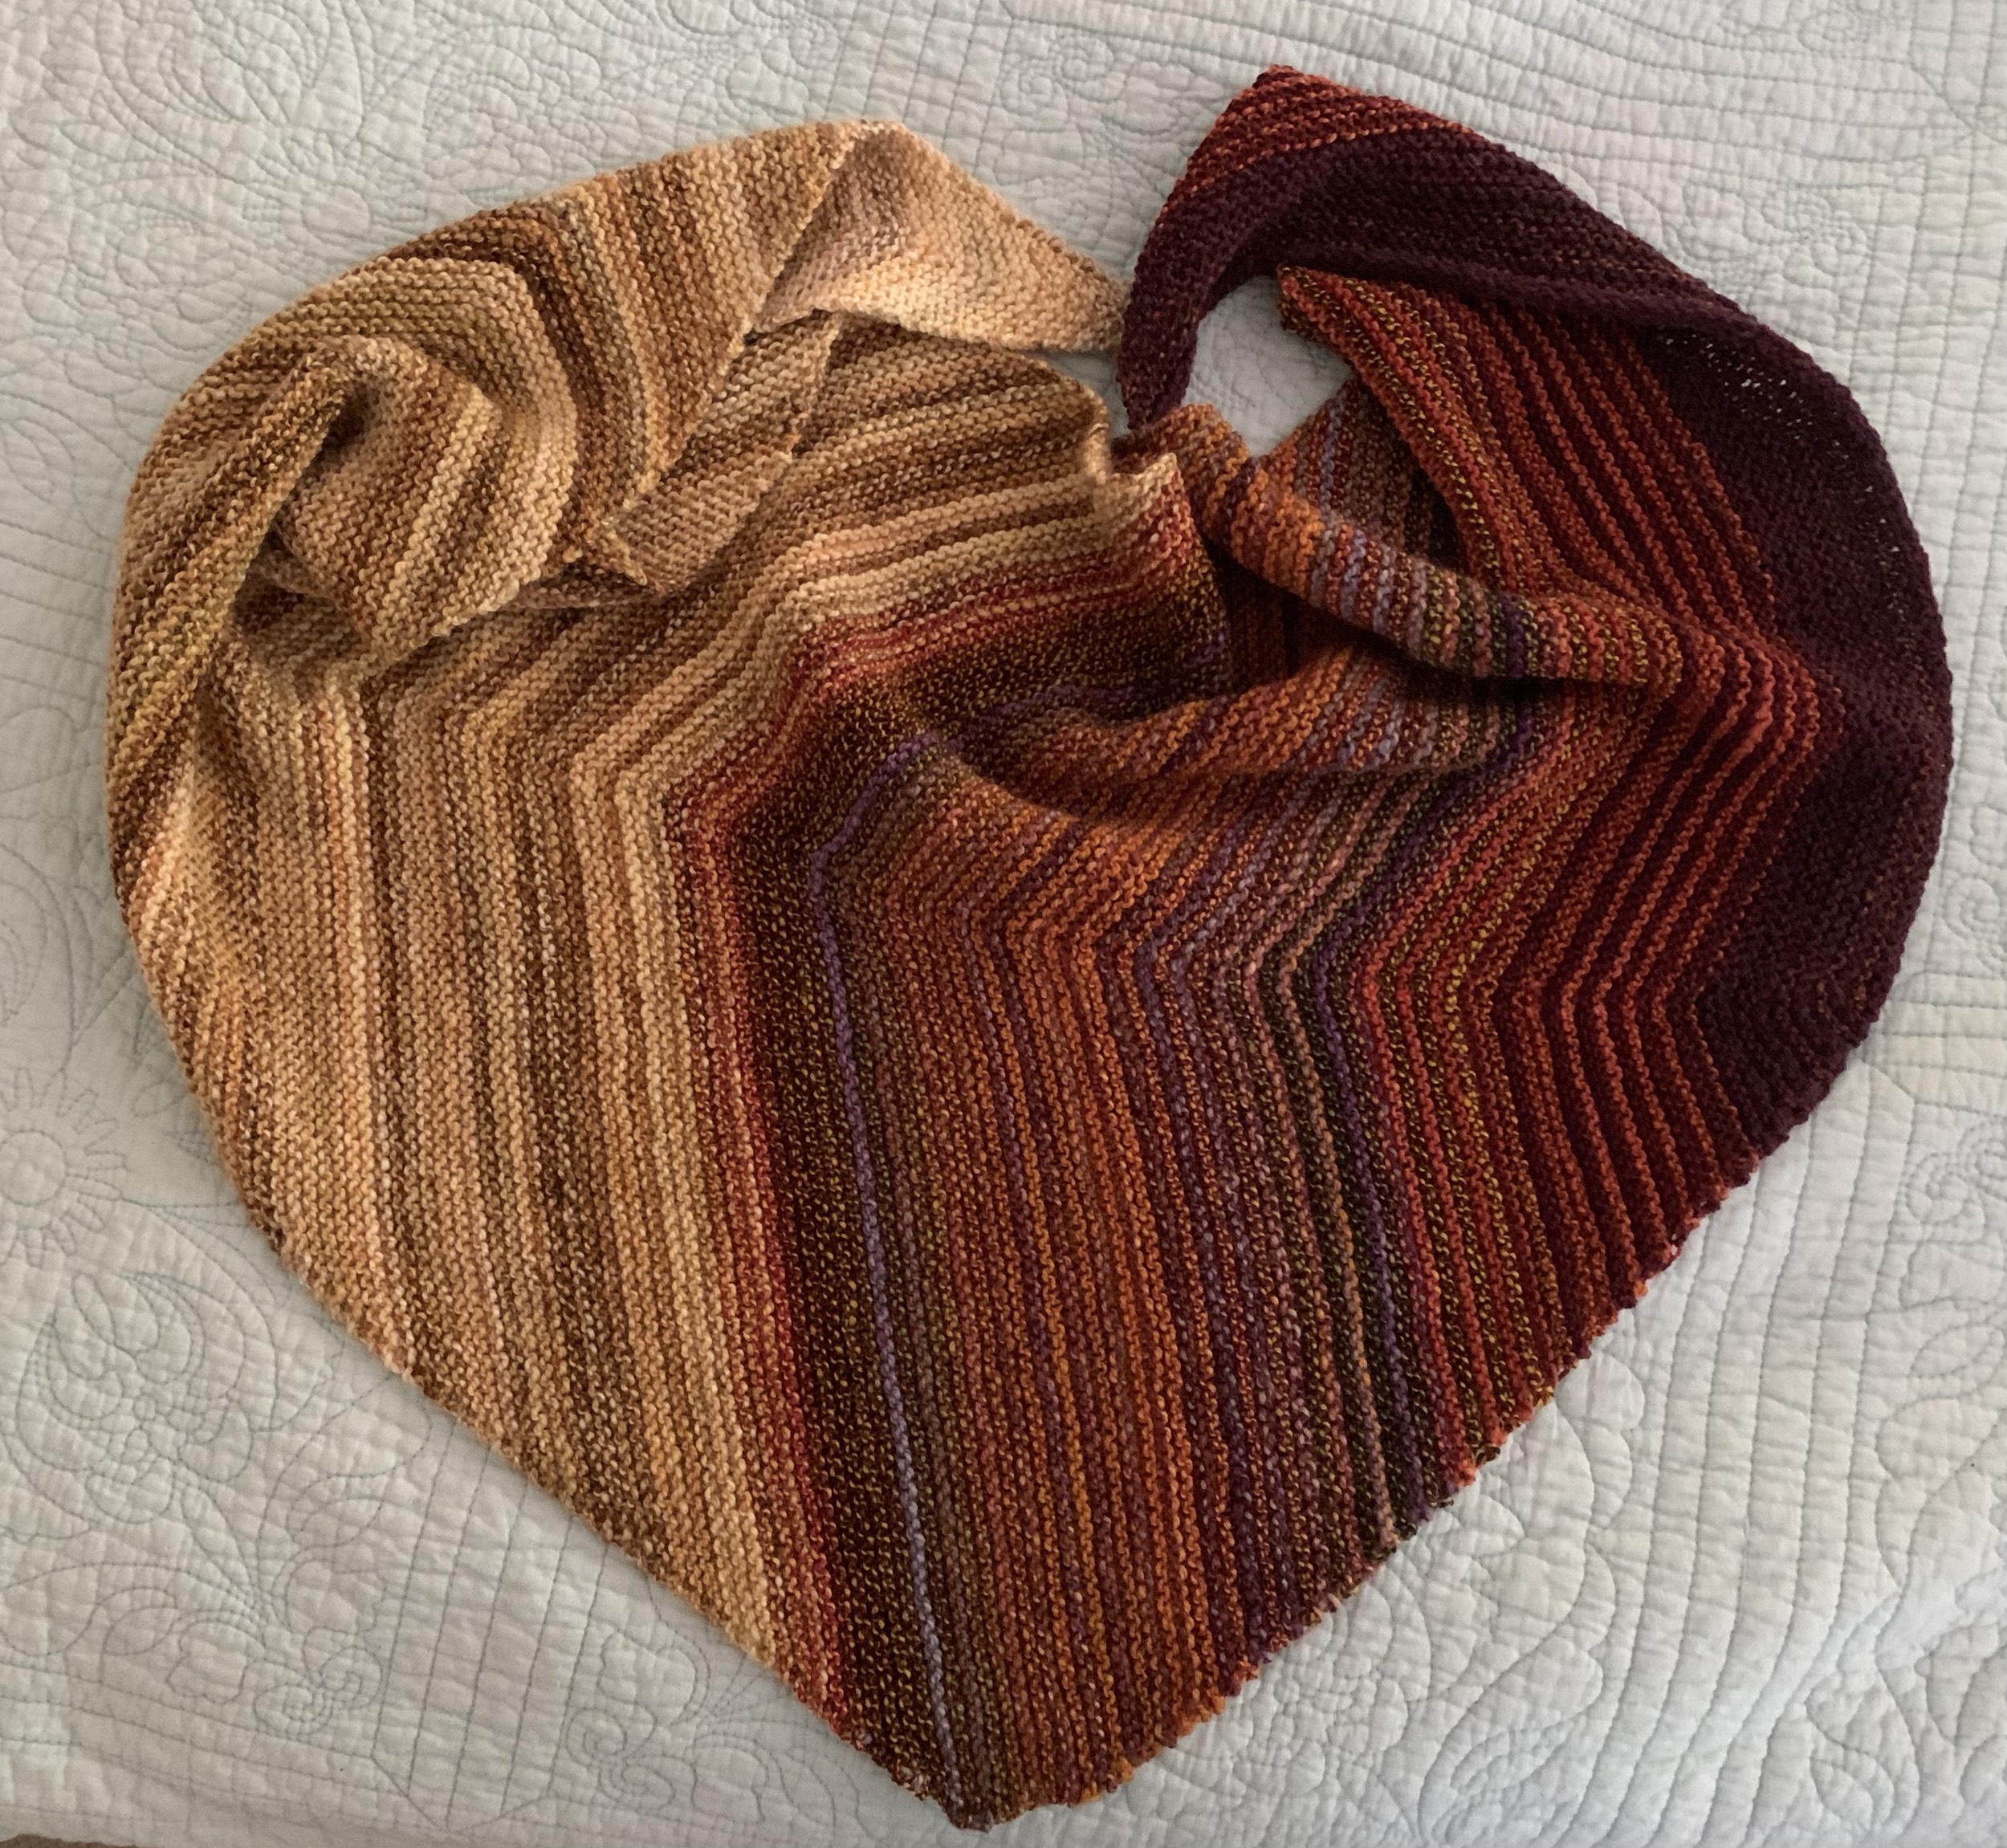 Hidden Gems shawl knitting